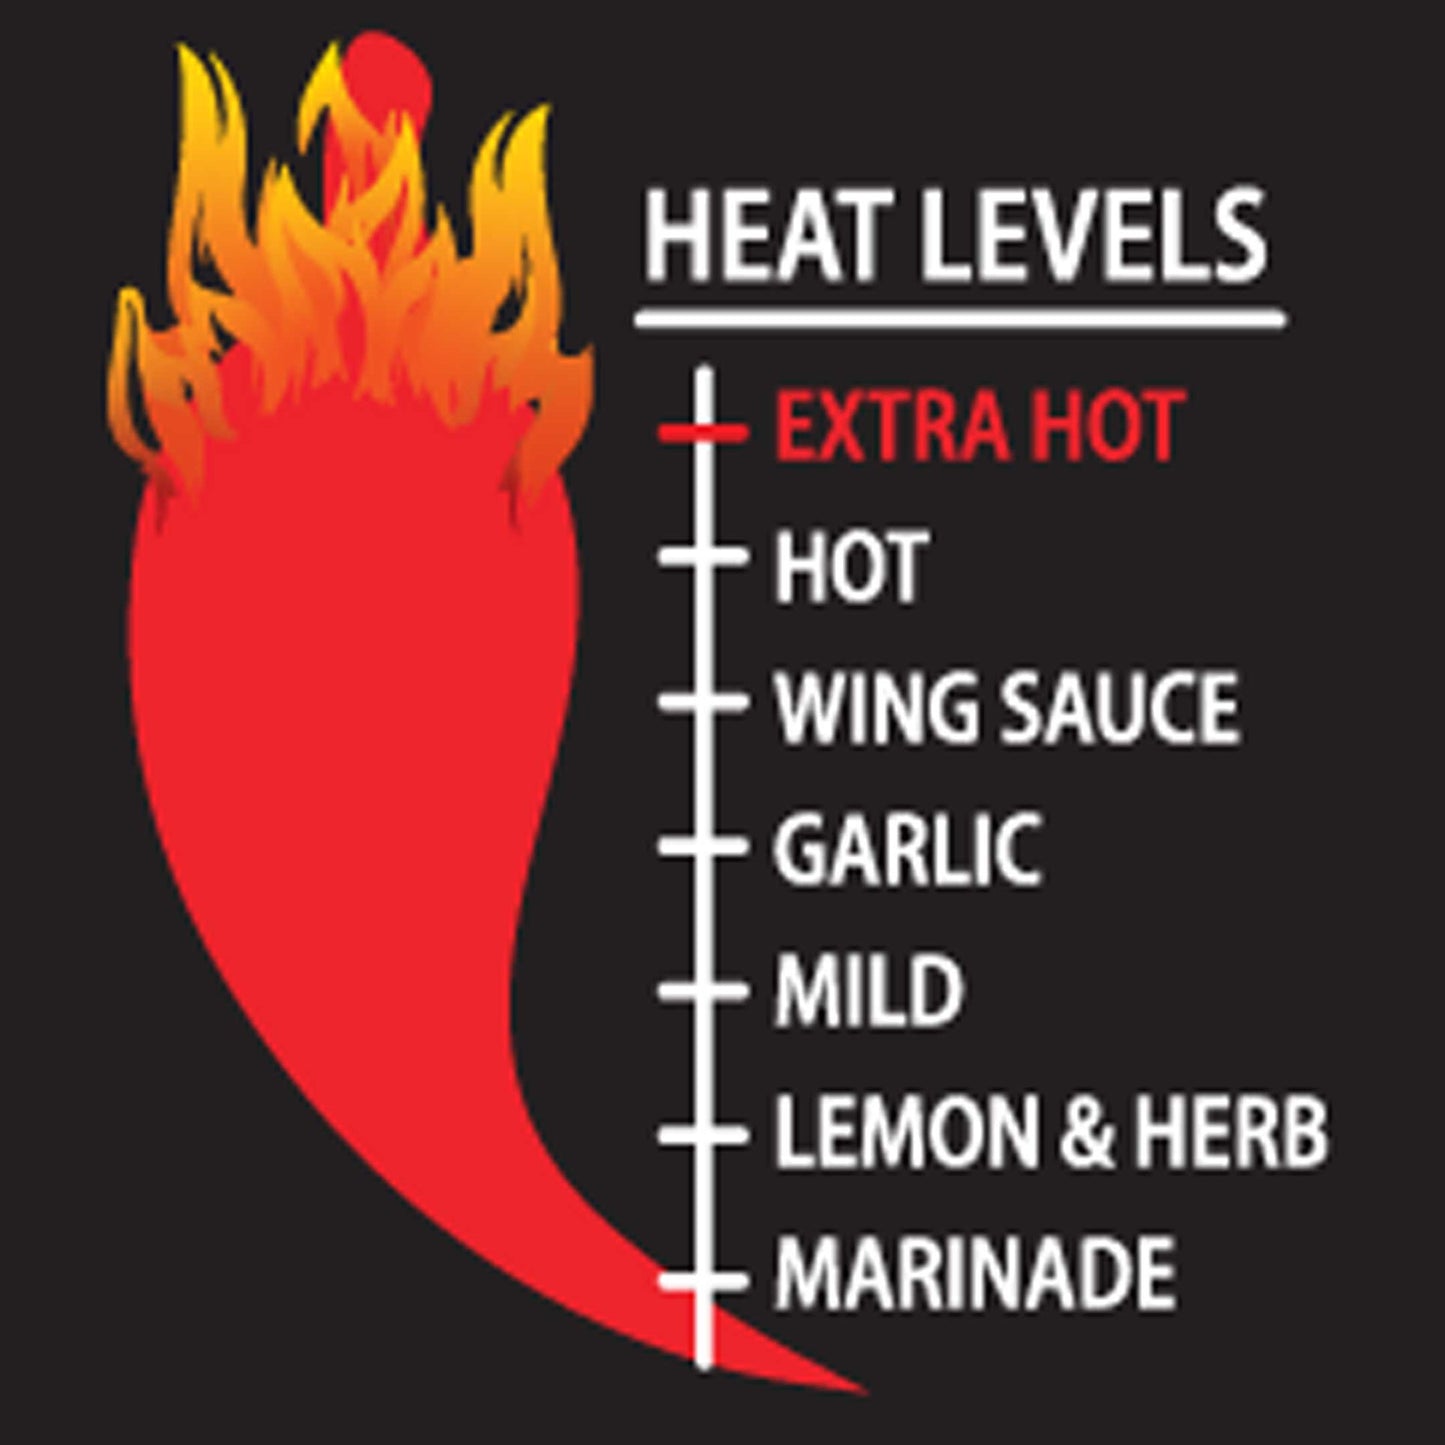 Heat level index for EXTRA HOT Peri-Peri Sauce - 7out of 7 - Peri-Peri Supply Co. (DiChickO's Peri-Peri)